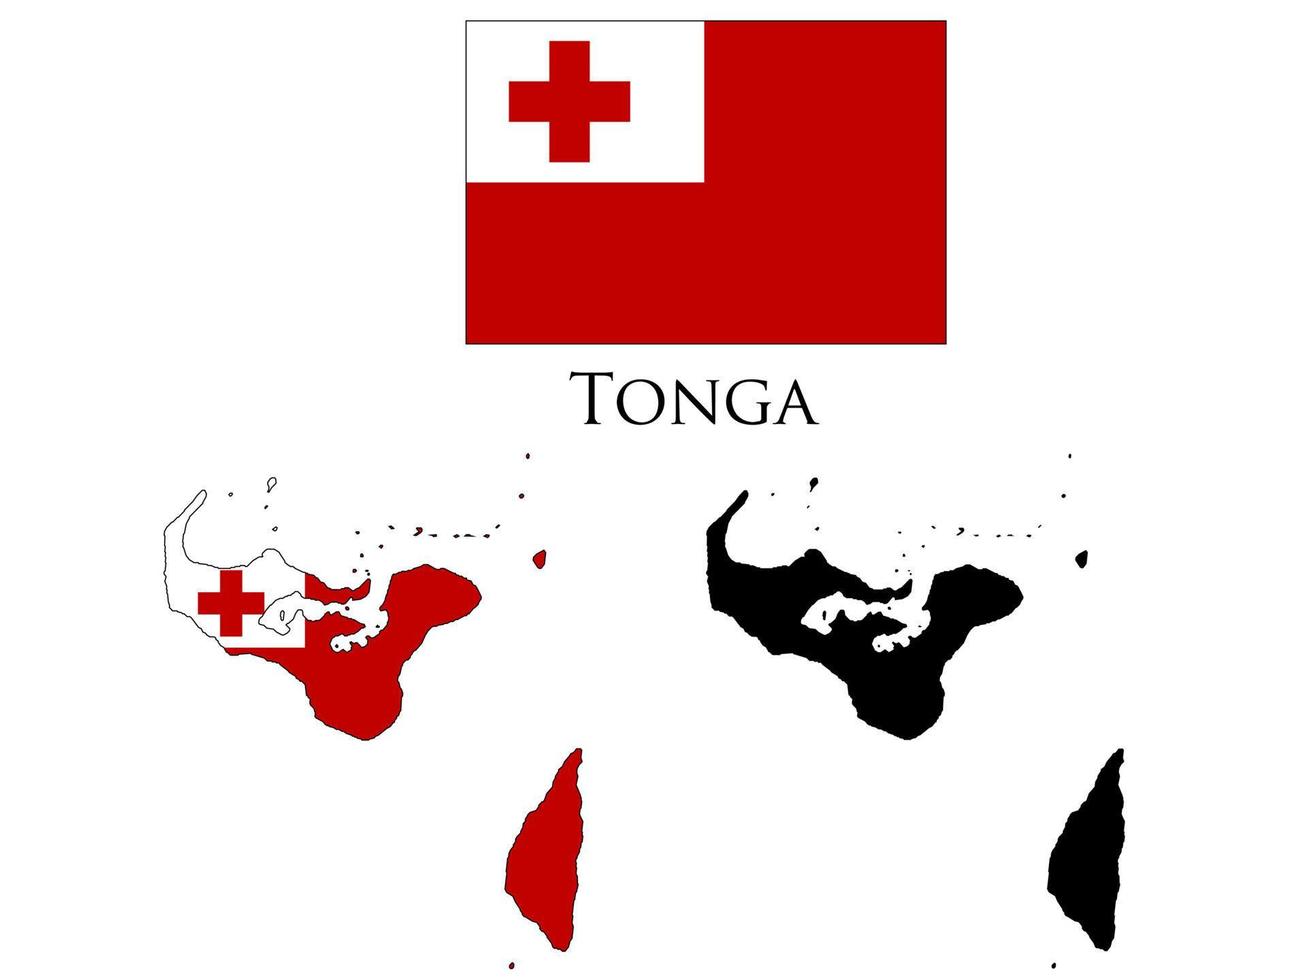 Tonga flag and map illustration vector